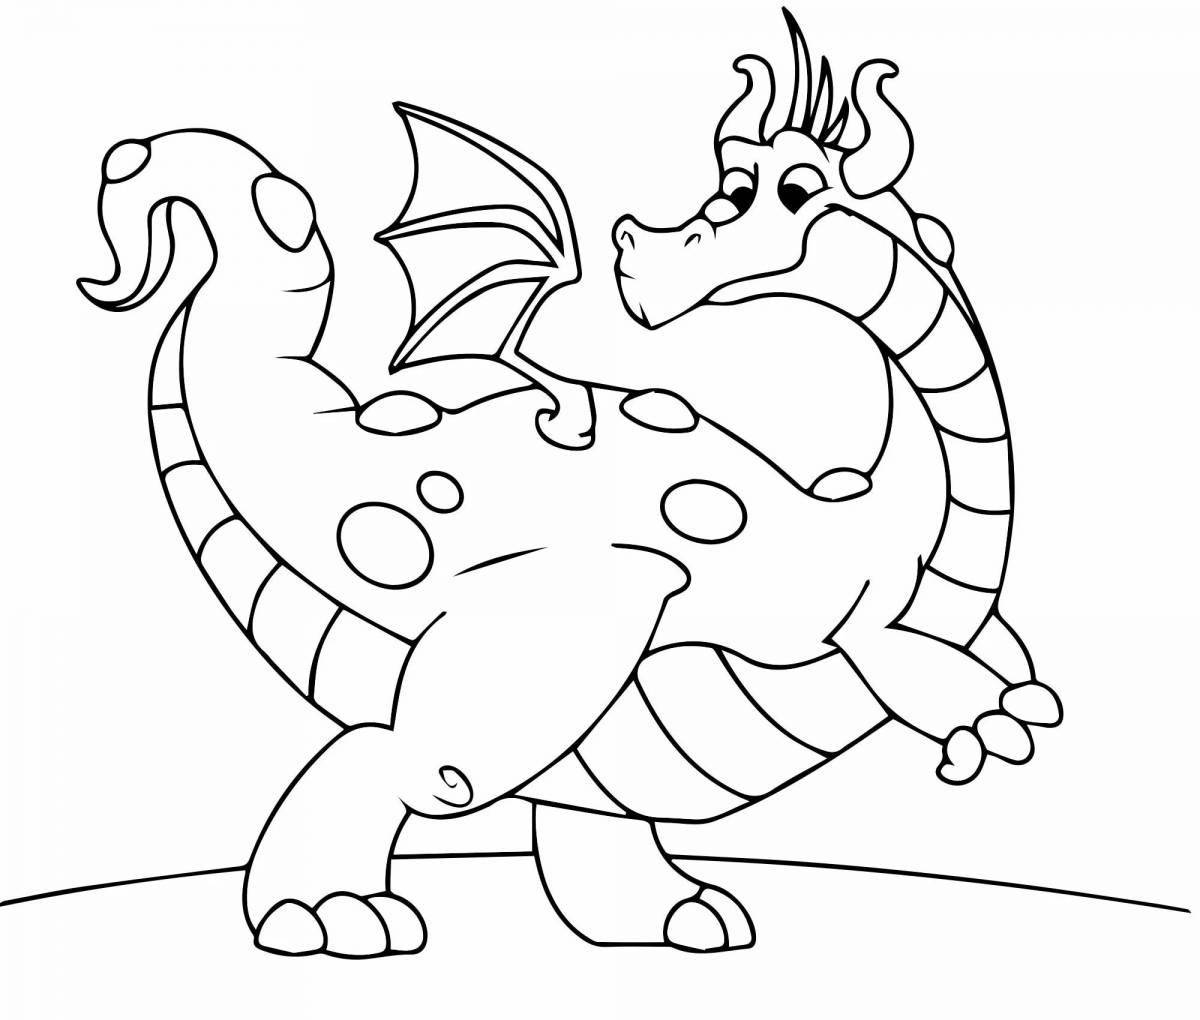 Children's dragon #1